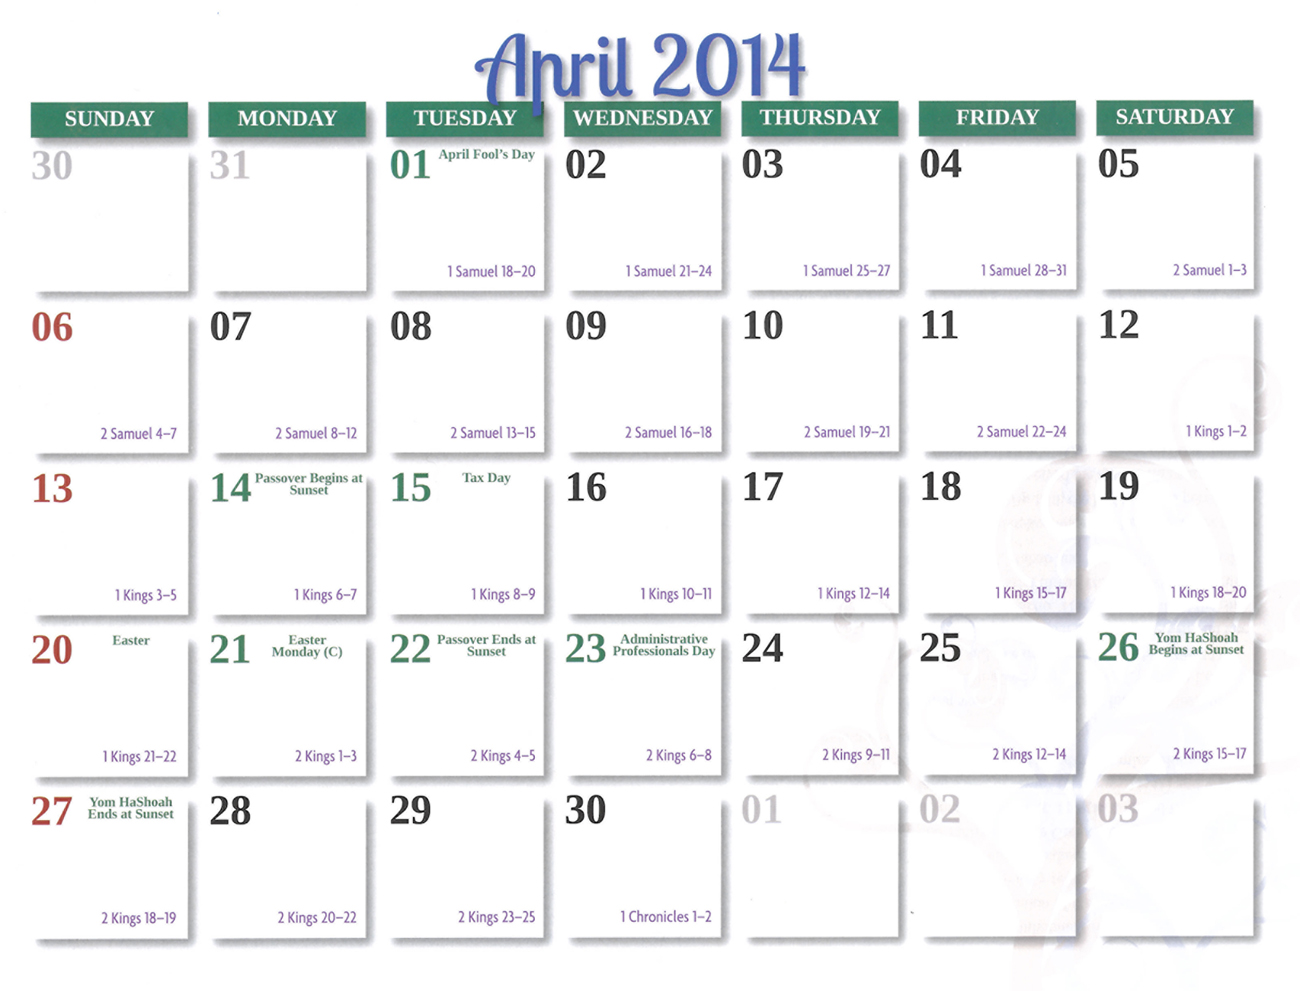 2014 Prophecy Calendar: April - Prophecies of Ezekiel